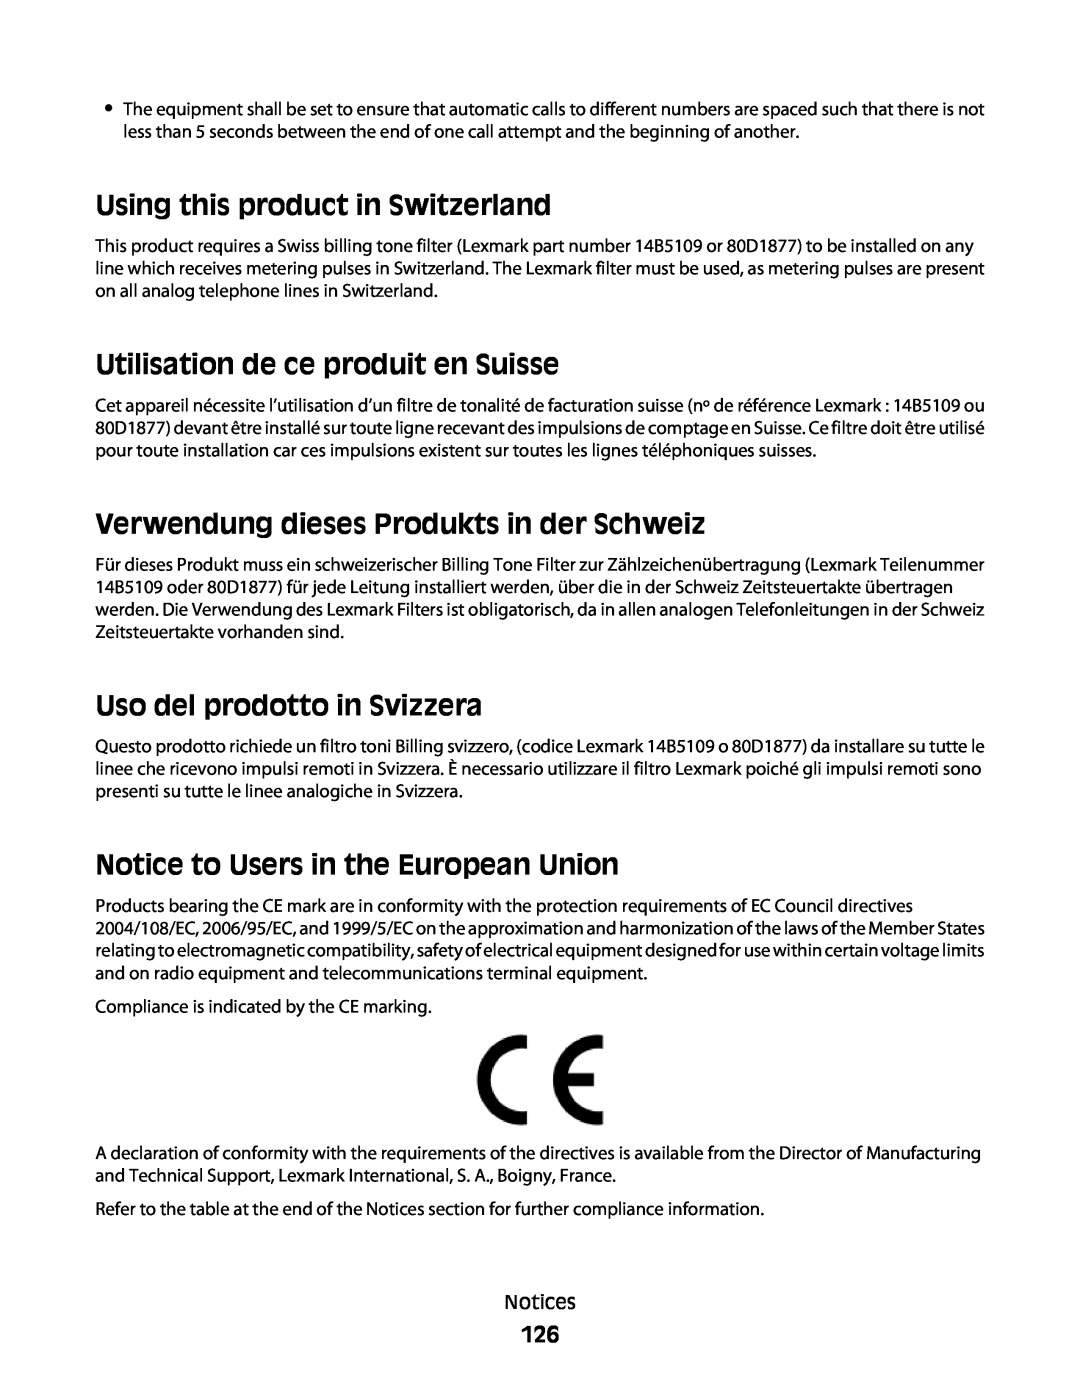 Lexmark 101, 10E manual Using this product in Switzerland, Utilisation de ce produit en Suisse, Uso del prodotto in Svizzera 